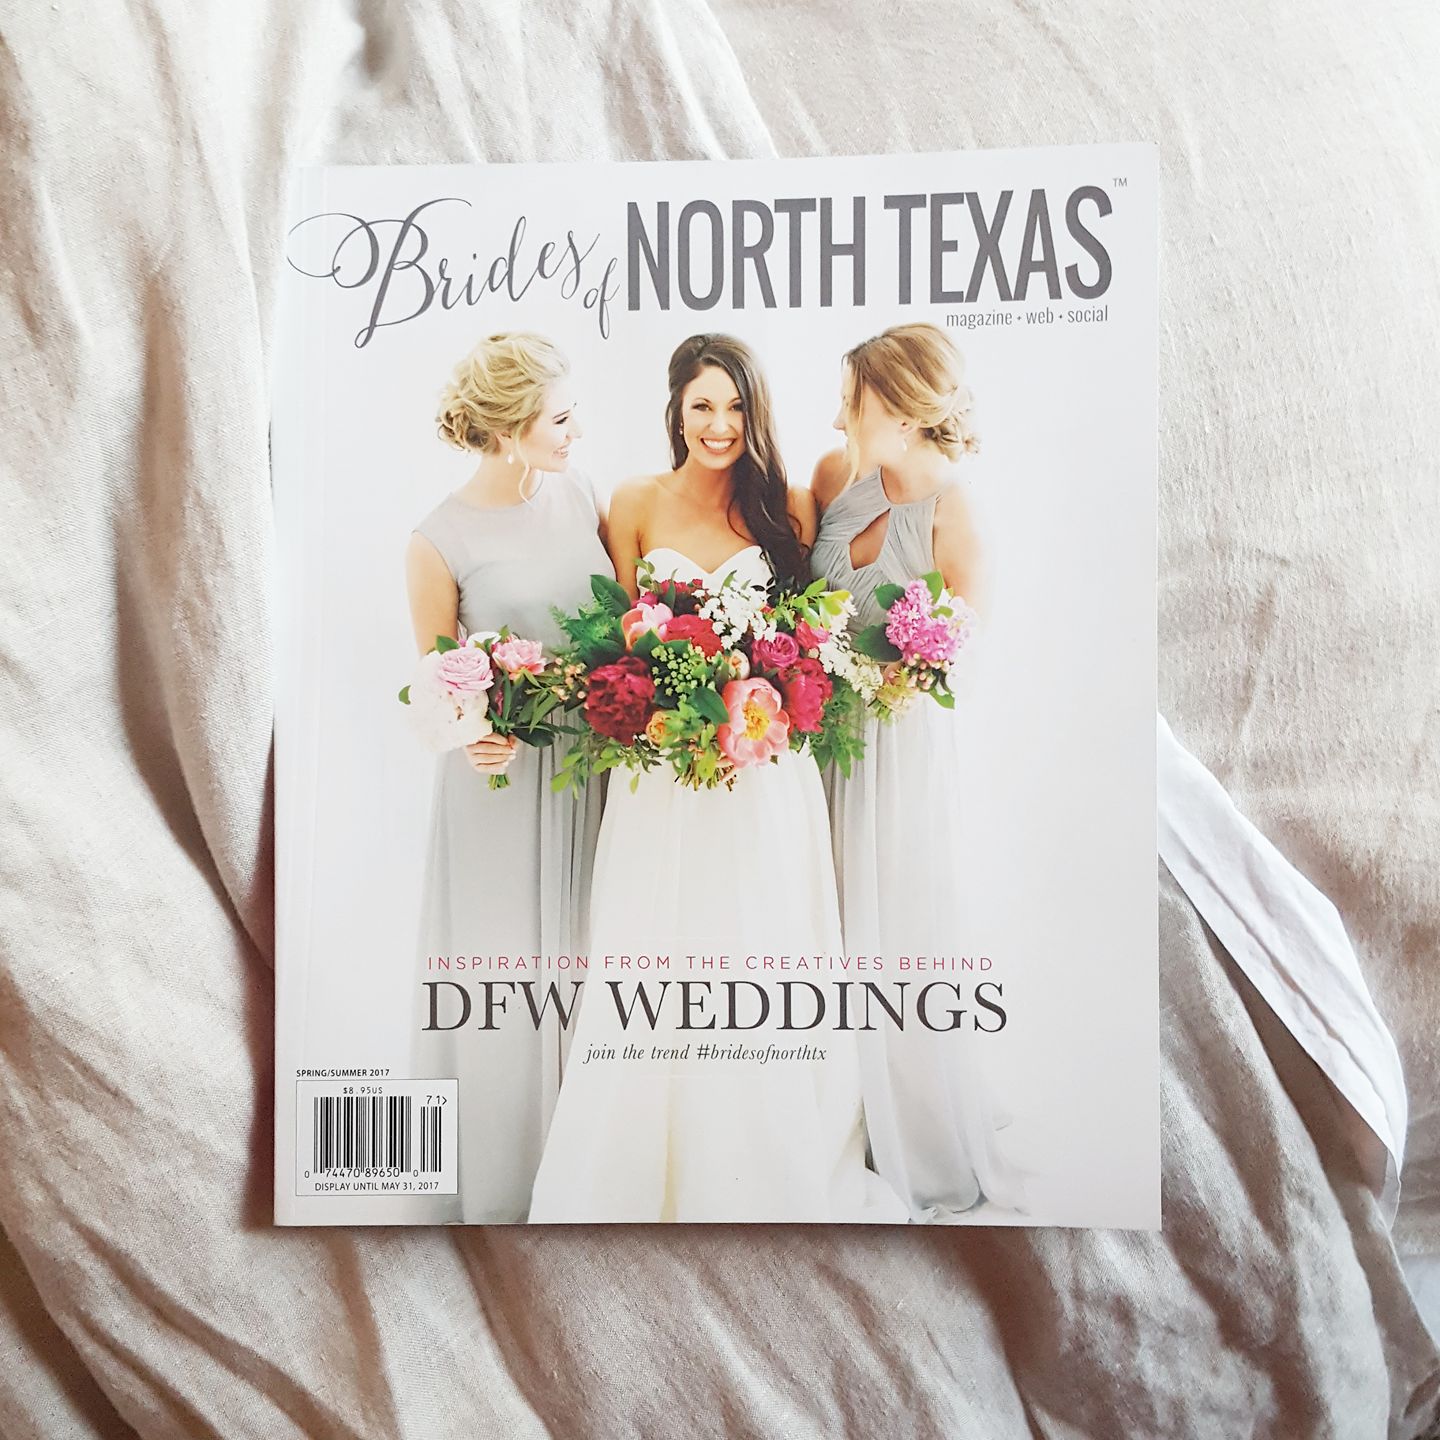 Top Wedding Calligrapher | Sarah Ann Design, Brides of North Texas Launch Feature